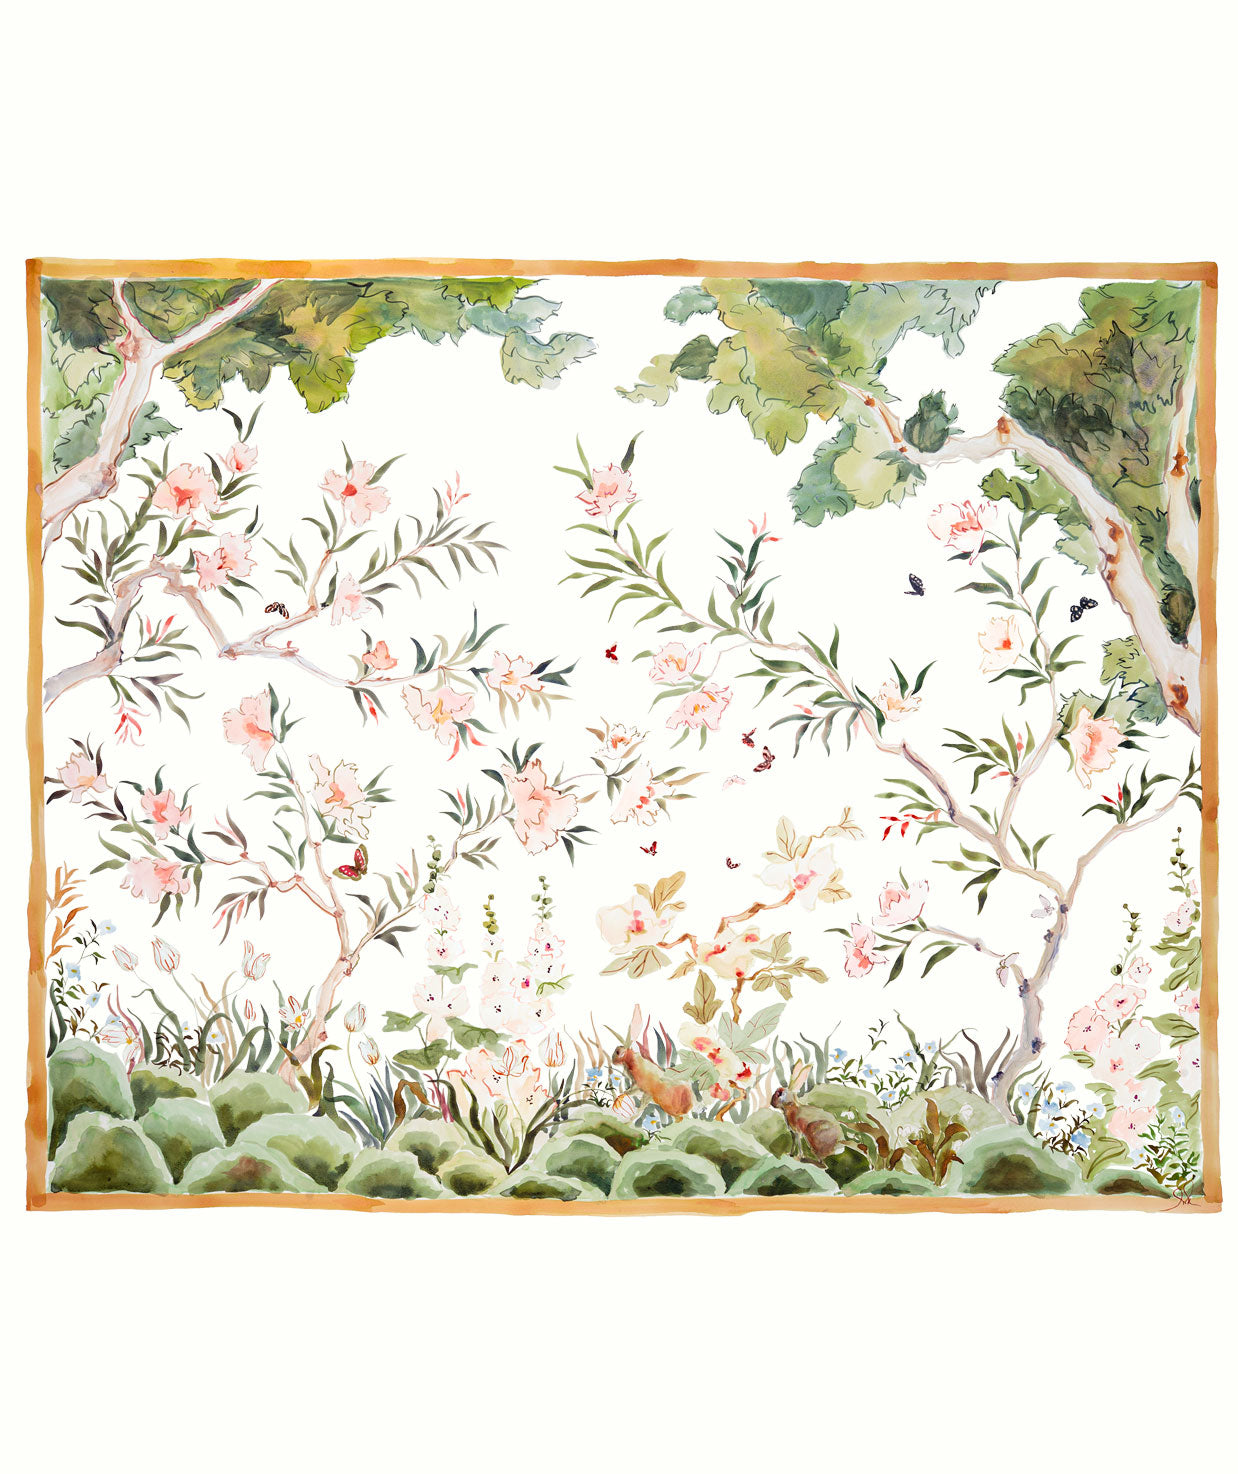 Mural Print: Bunny's Garden